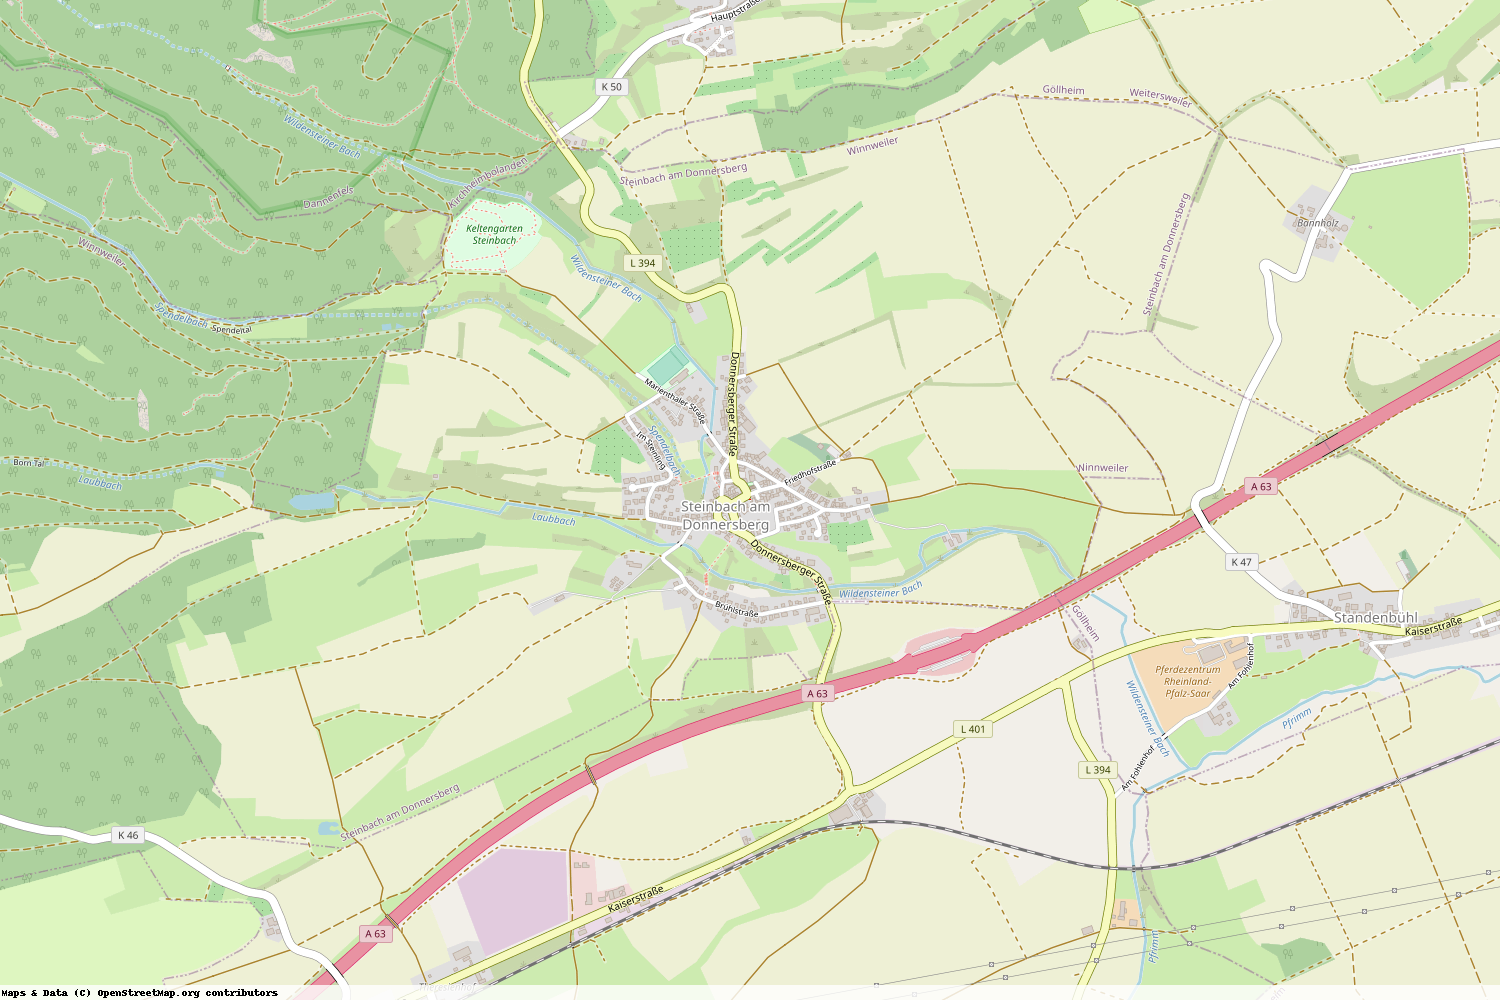 Ist gerade Stromausfall in Rheinland-Pfalz - Donnersbergkreis - Steinbach am Donnersberg?